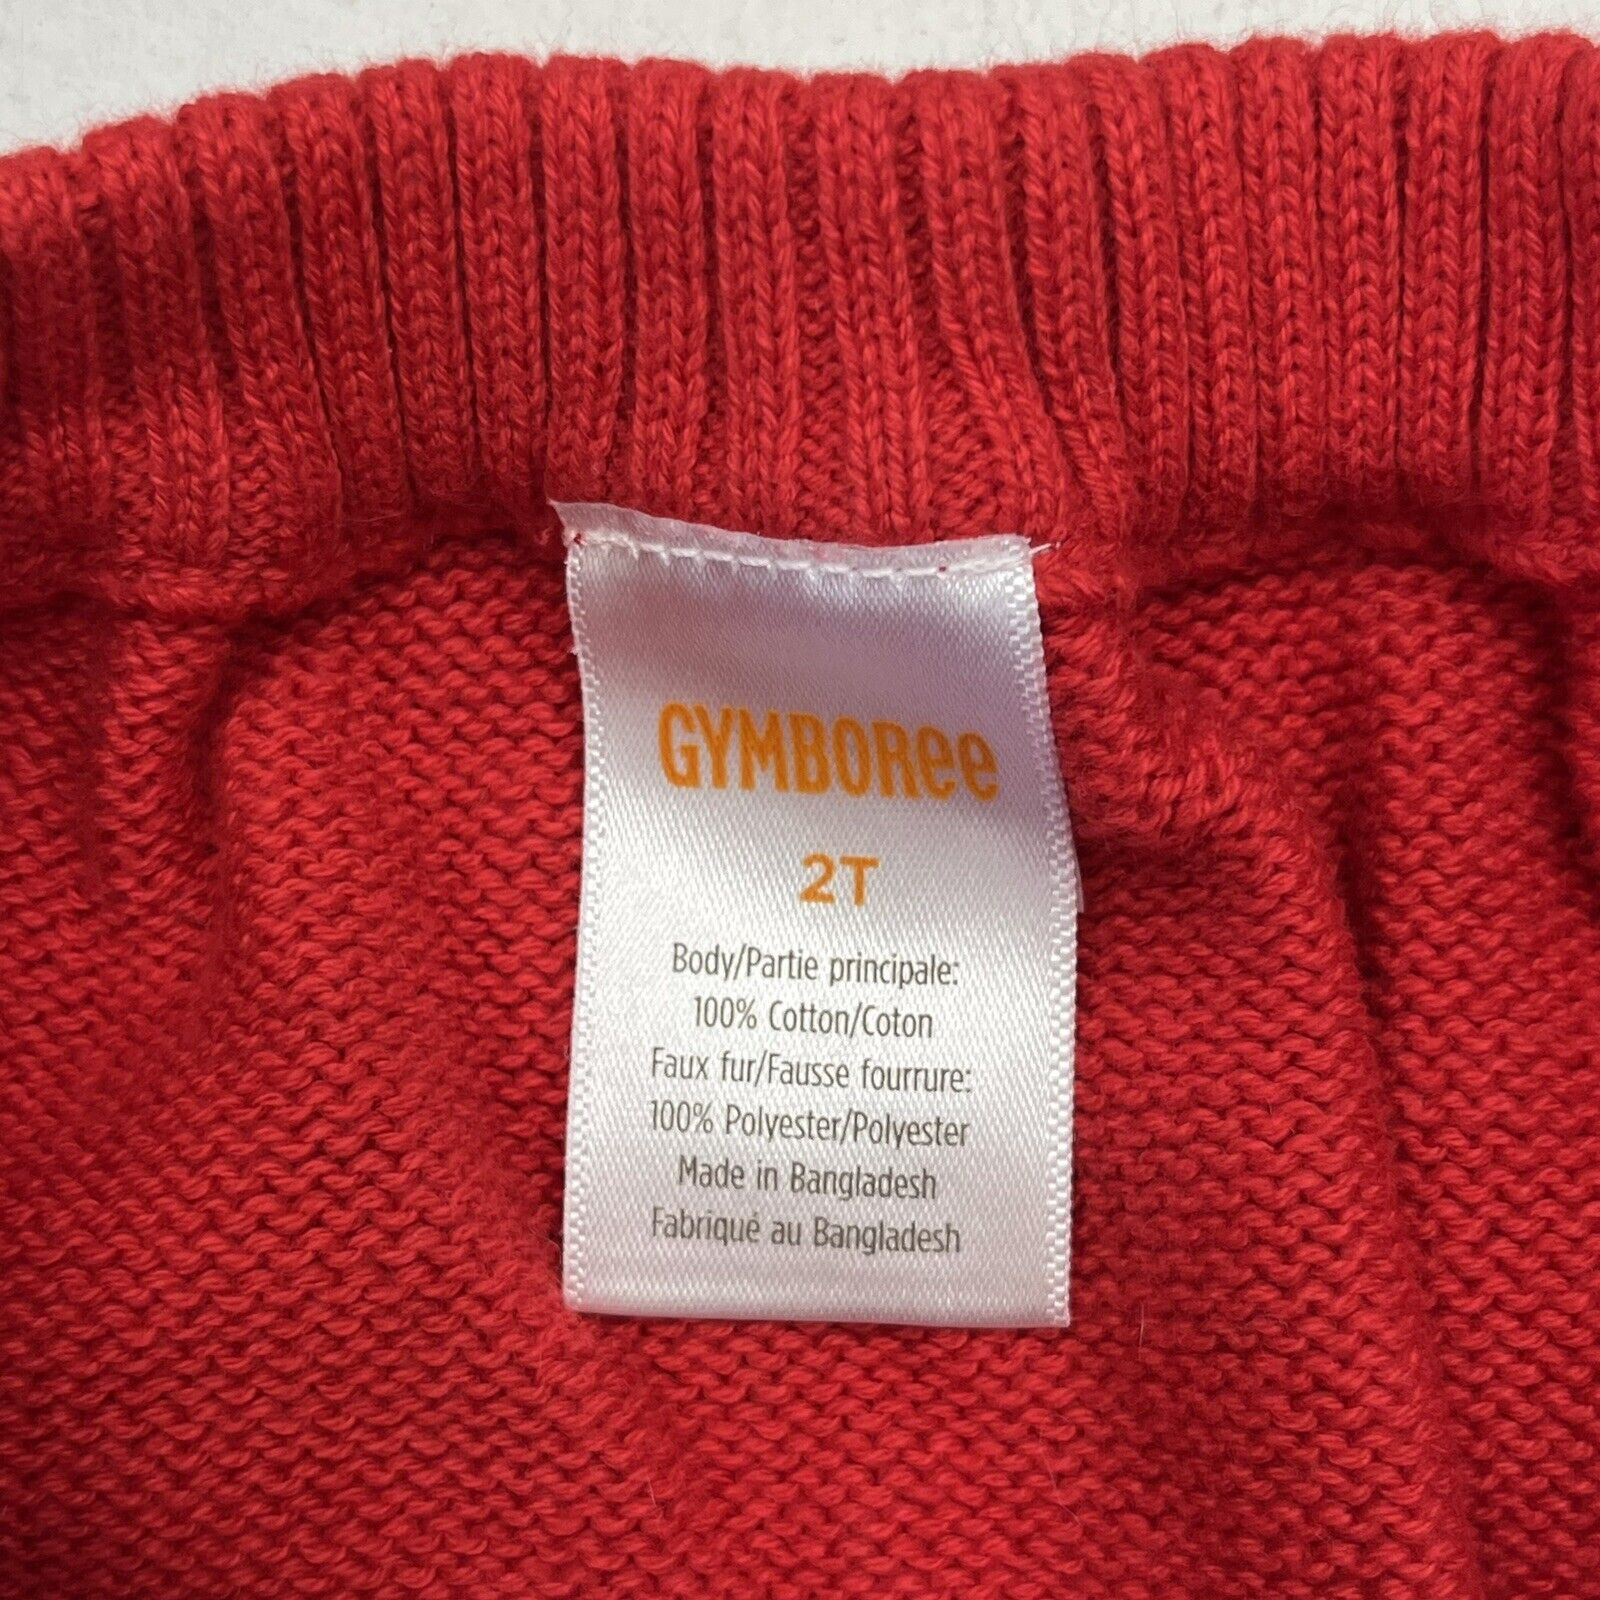 Gymboree Red Santa Skirt Girls Size 2T NEW - beyond exchange